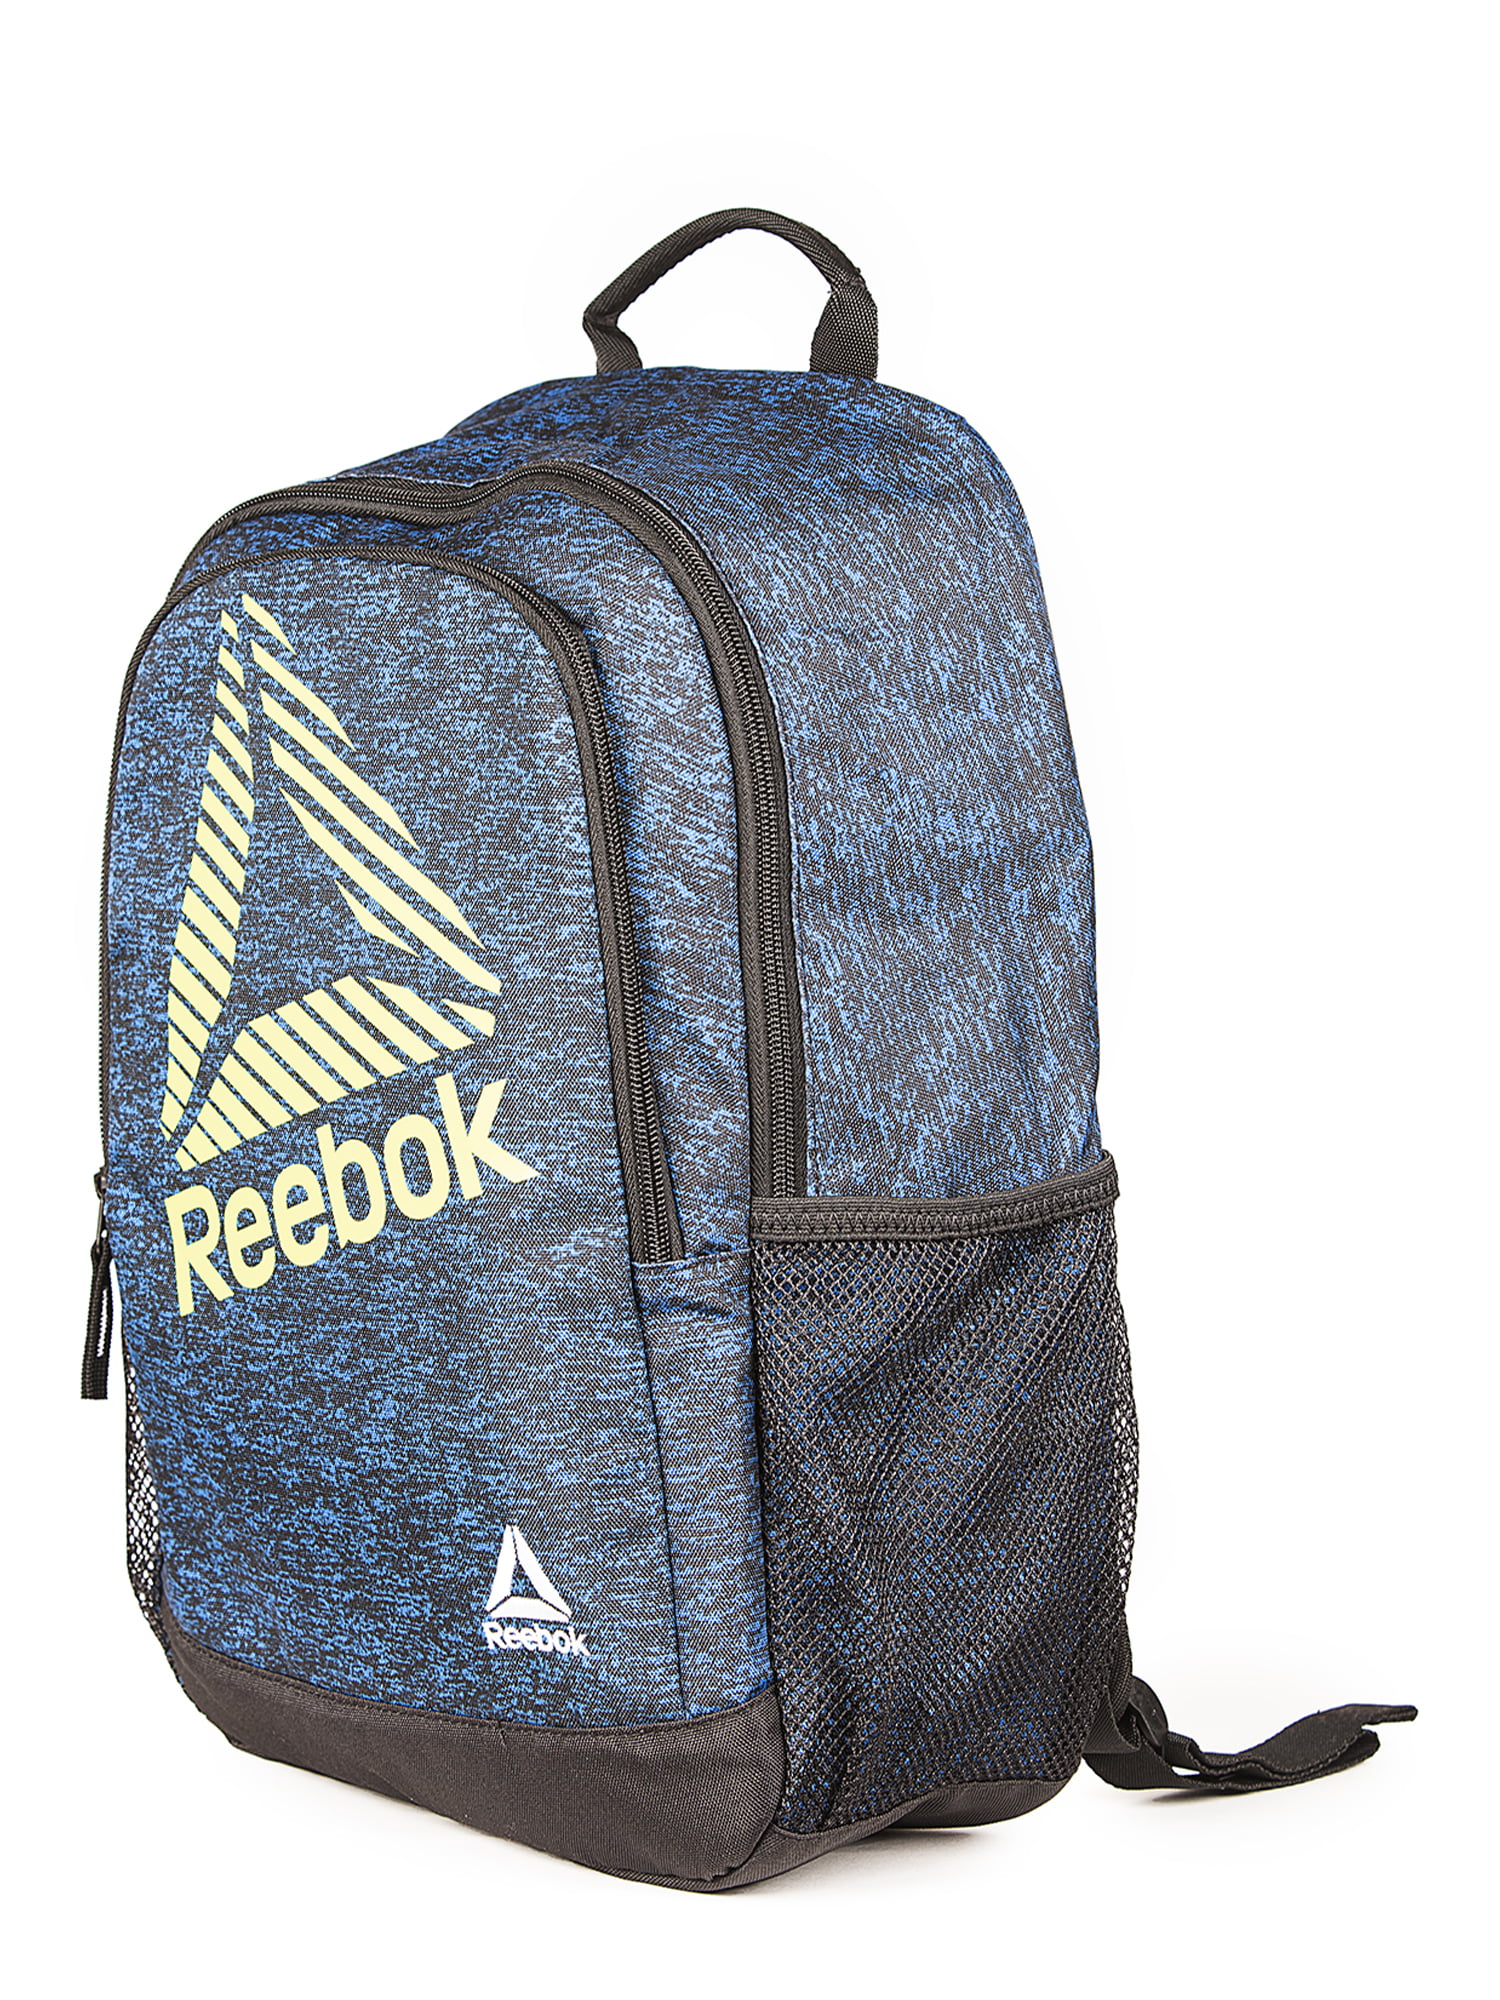 Reebok Unisex Lightweight, Durable, Water-Resistant Marley Backpack Magenta - Walmart.com